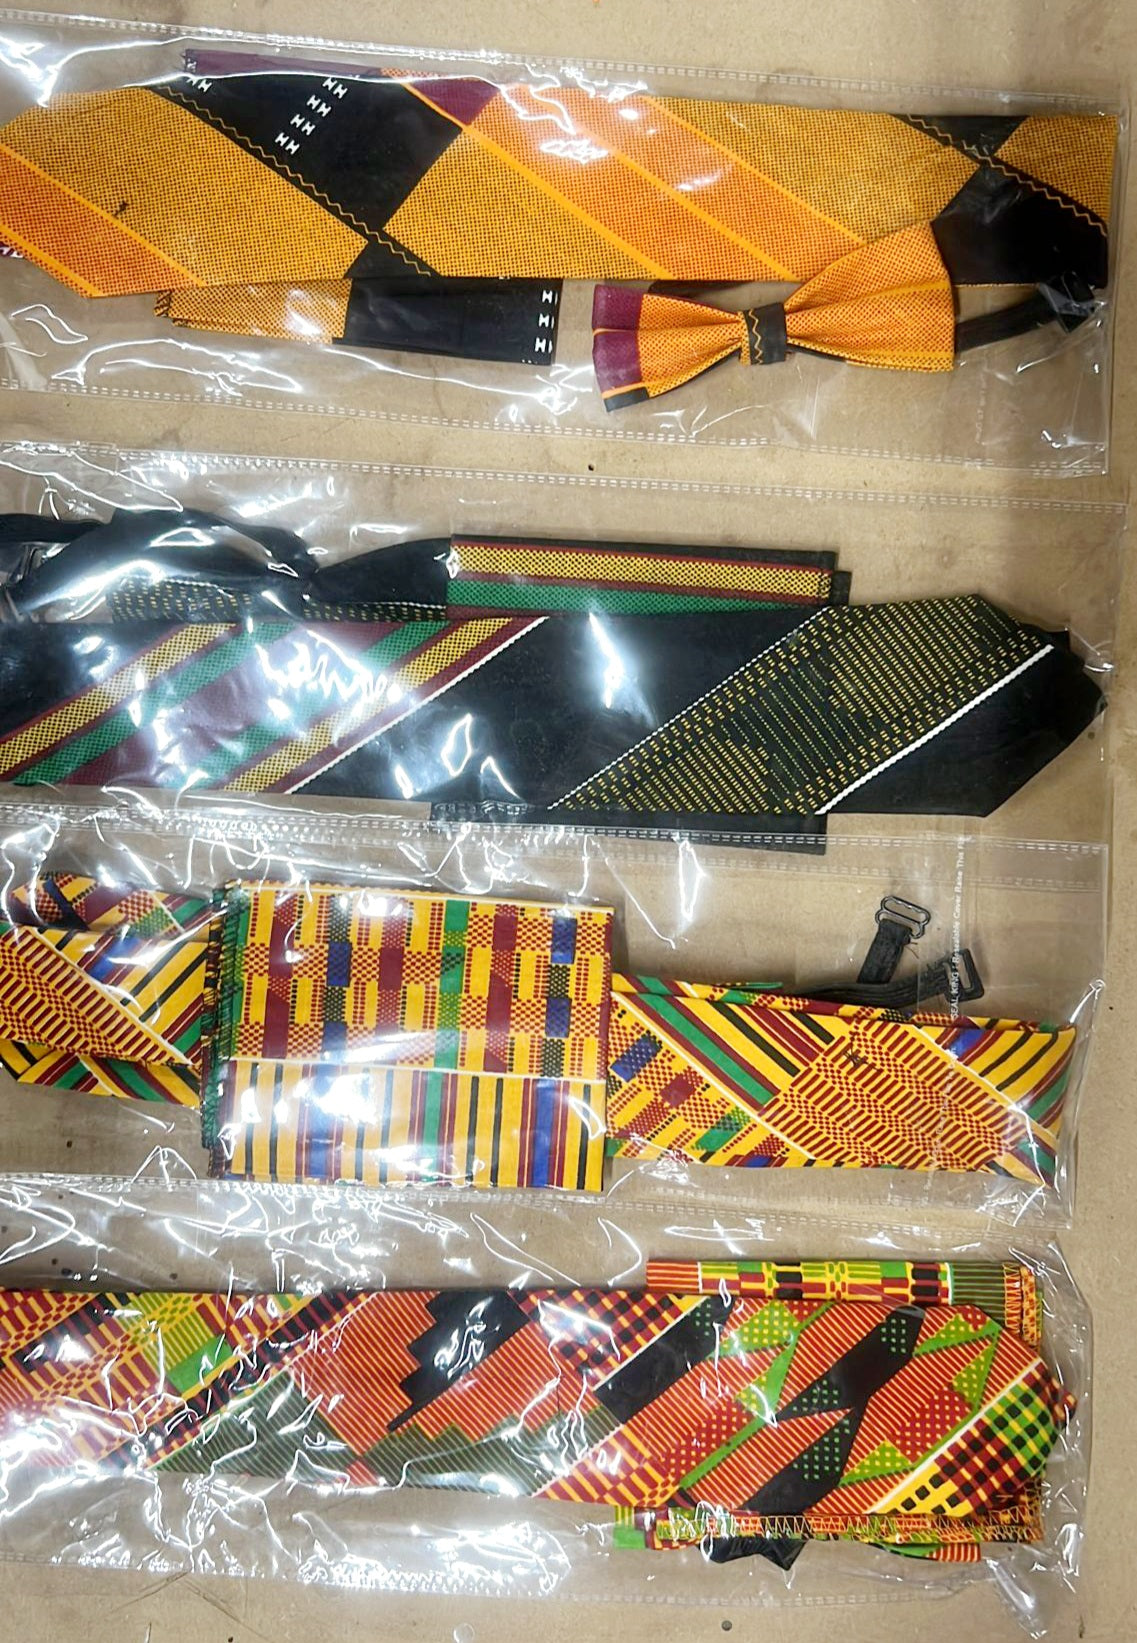 3 Pcs Bow tie Set-Traditional Kente Print